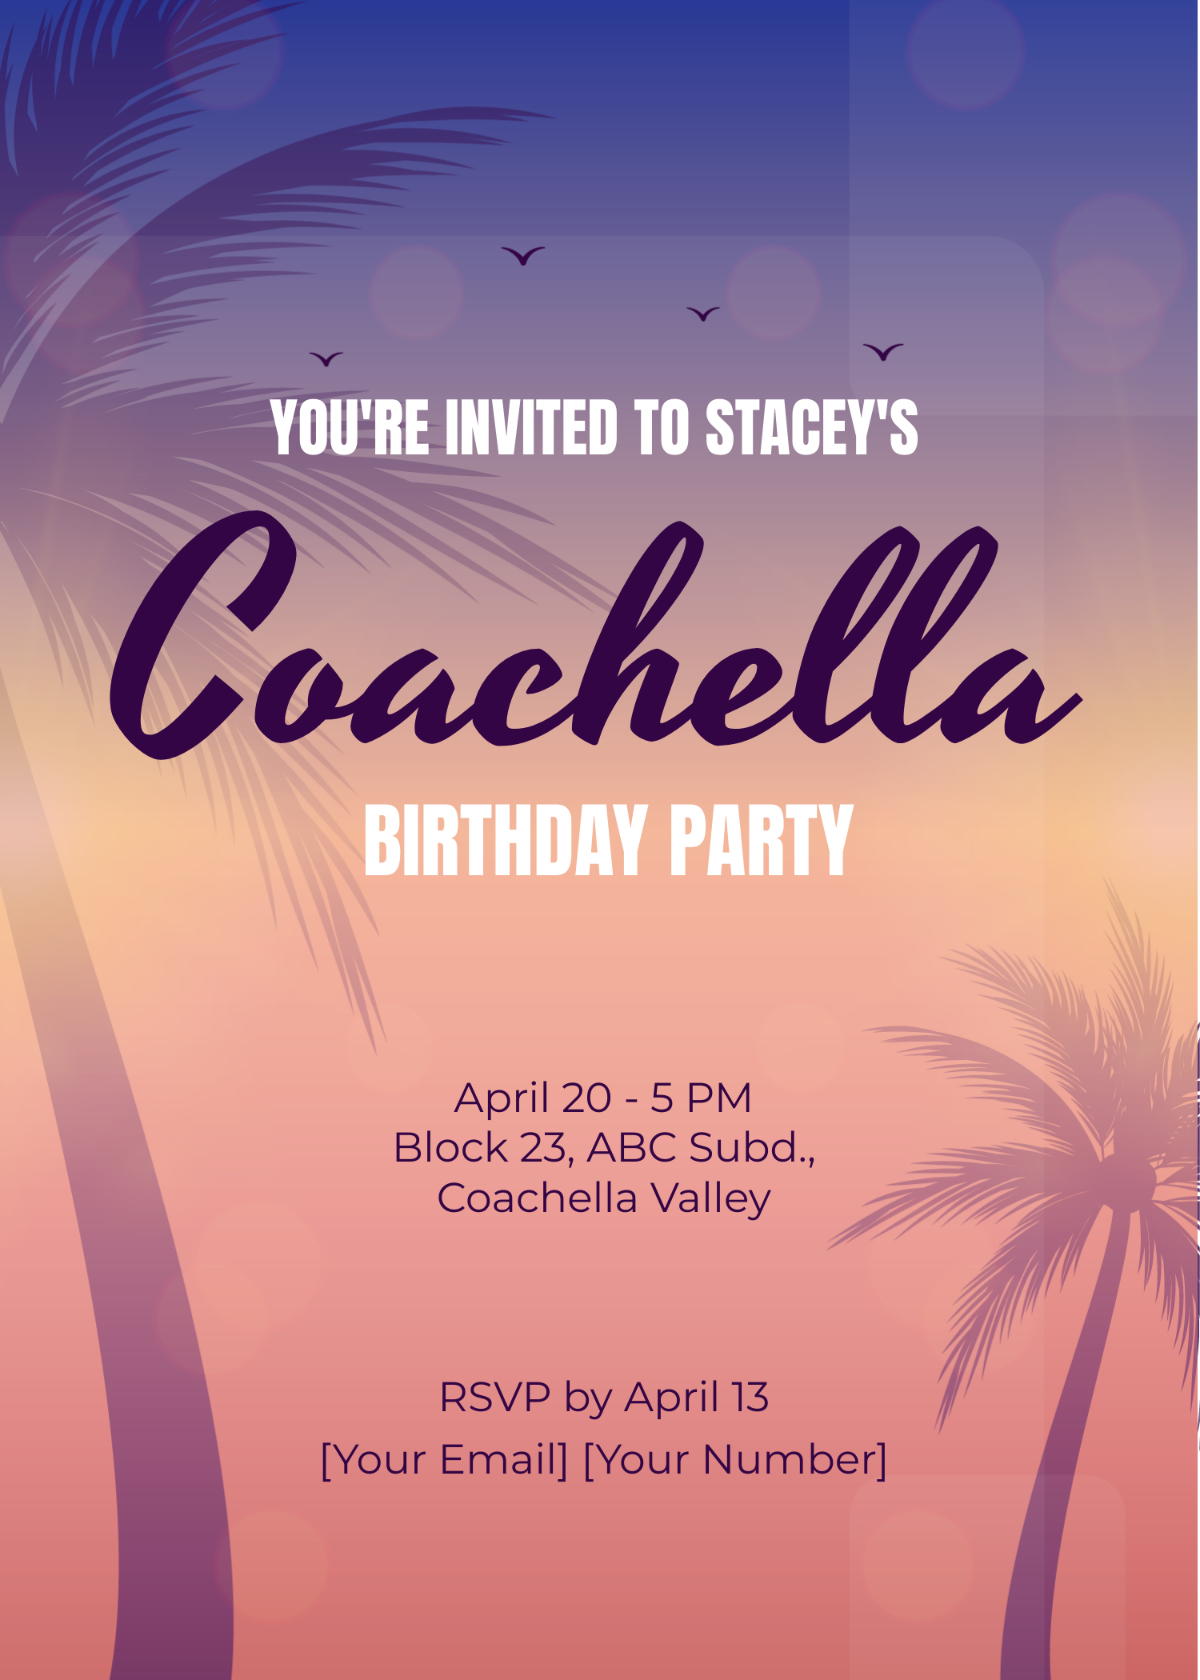 Coachella Themed Party Invitation